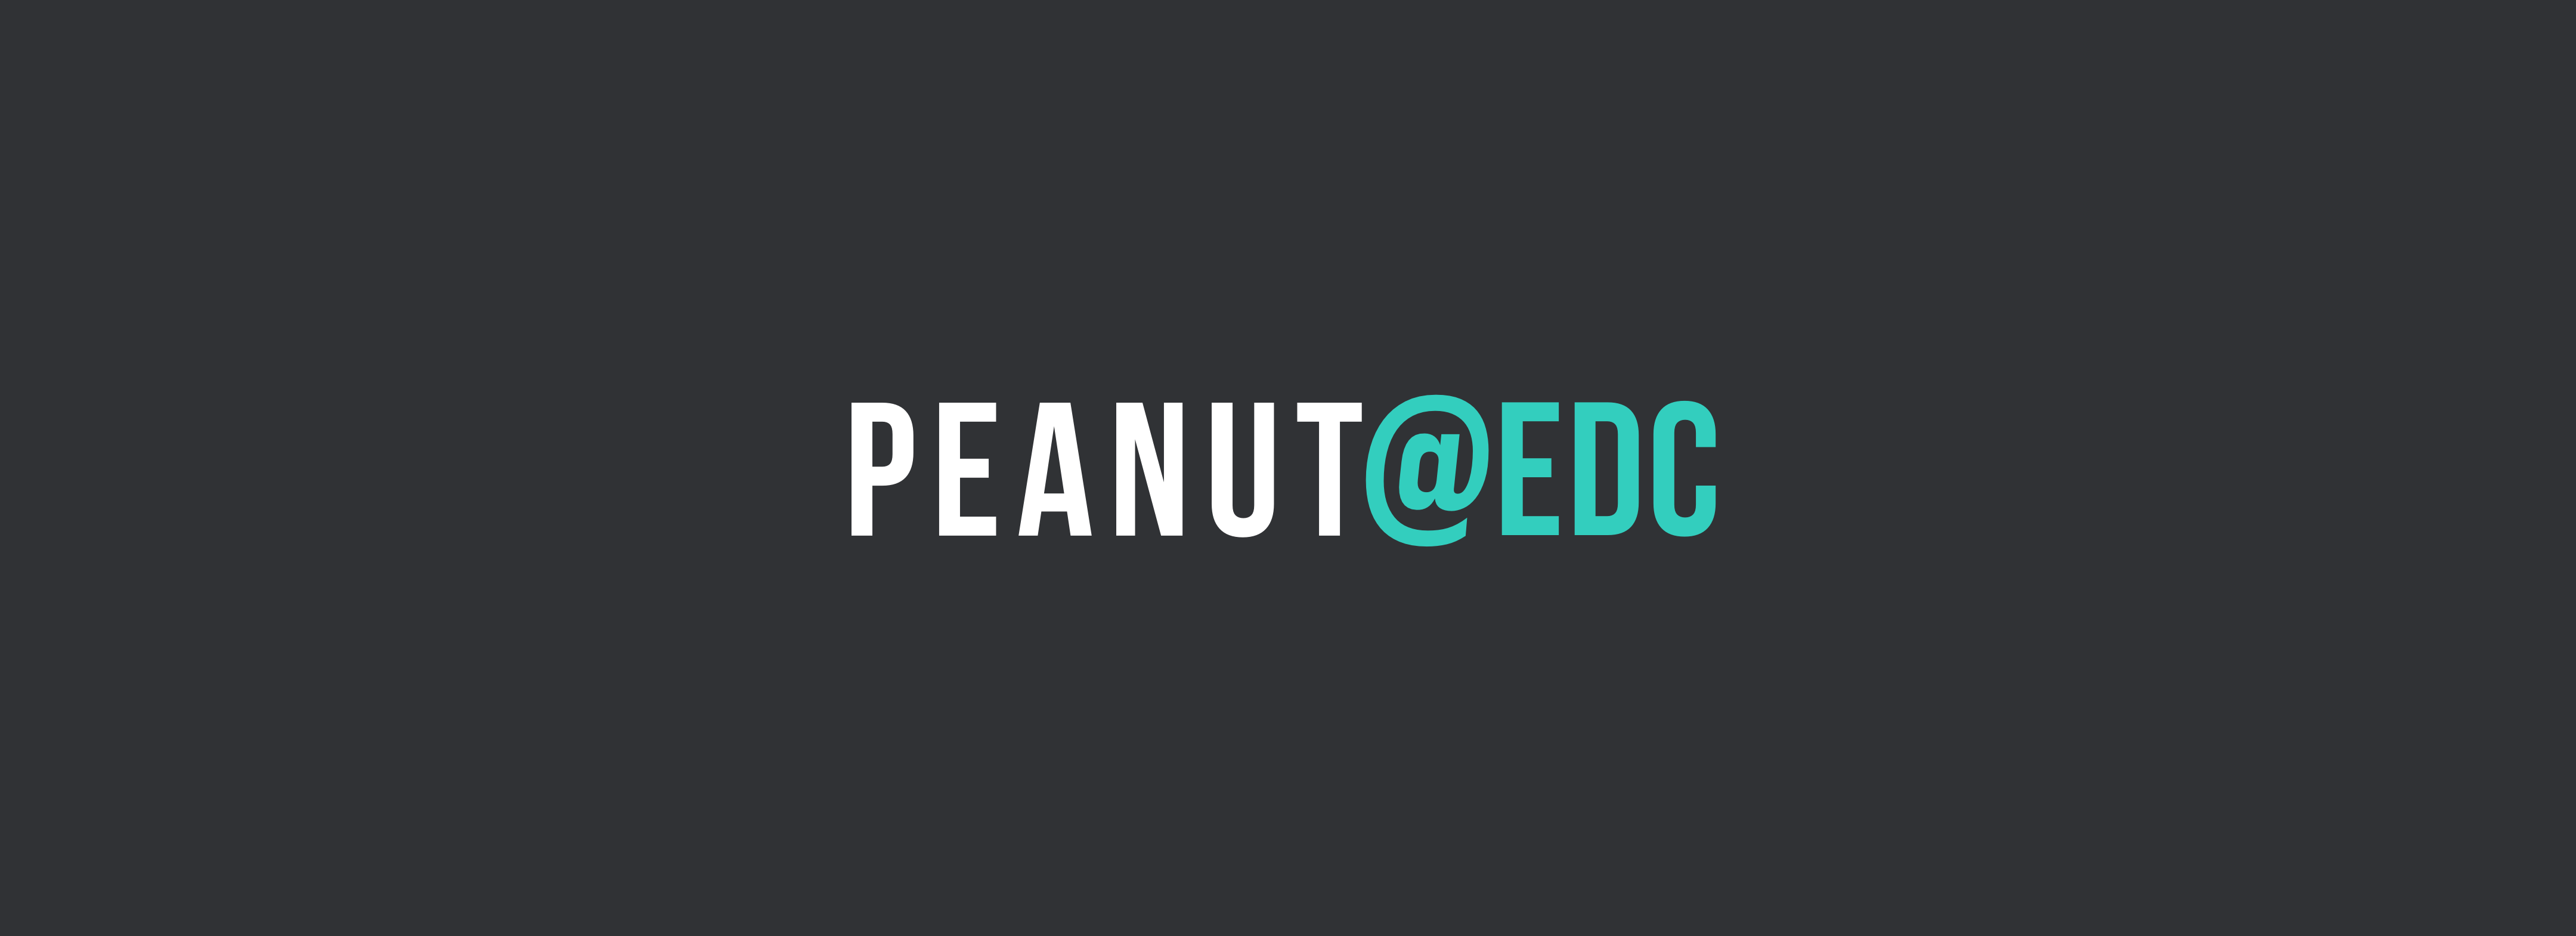 Peanut - An EDC Case Study